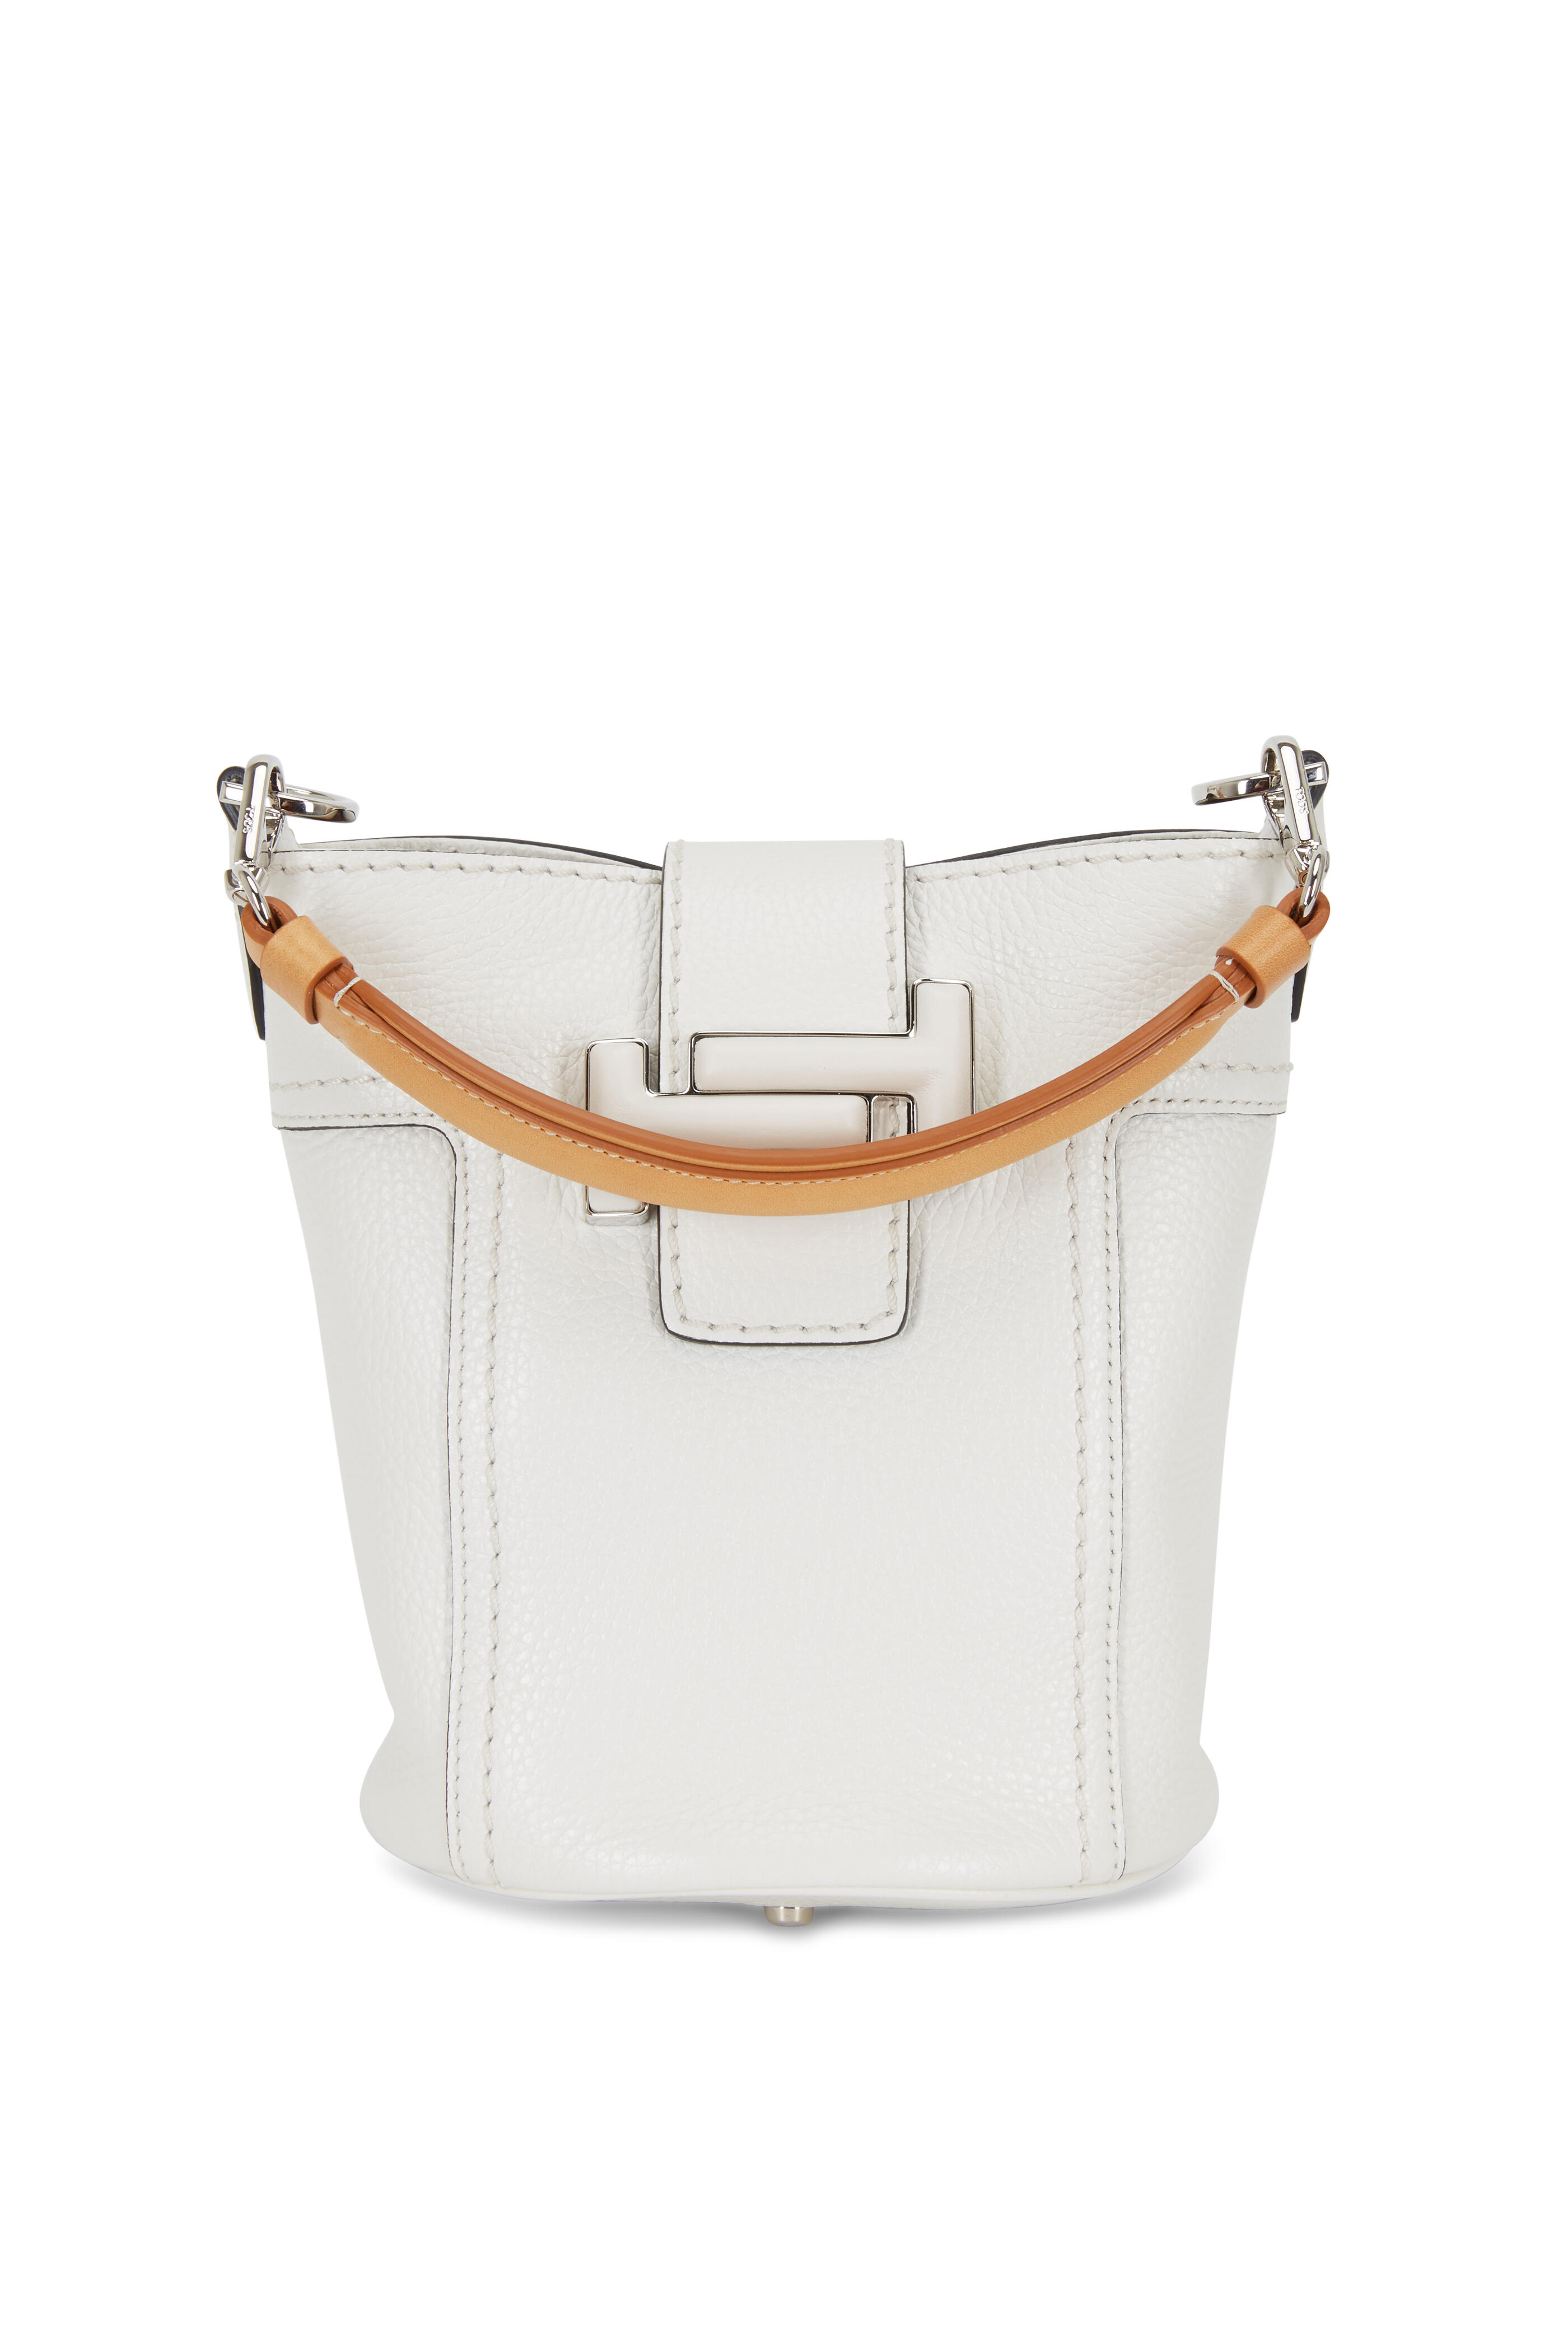 New TOD'S Mini Canvas Bucket Tote Bag Handbag with White